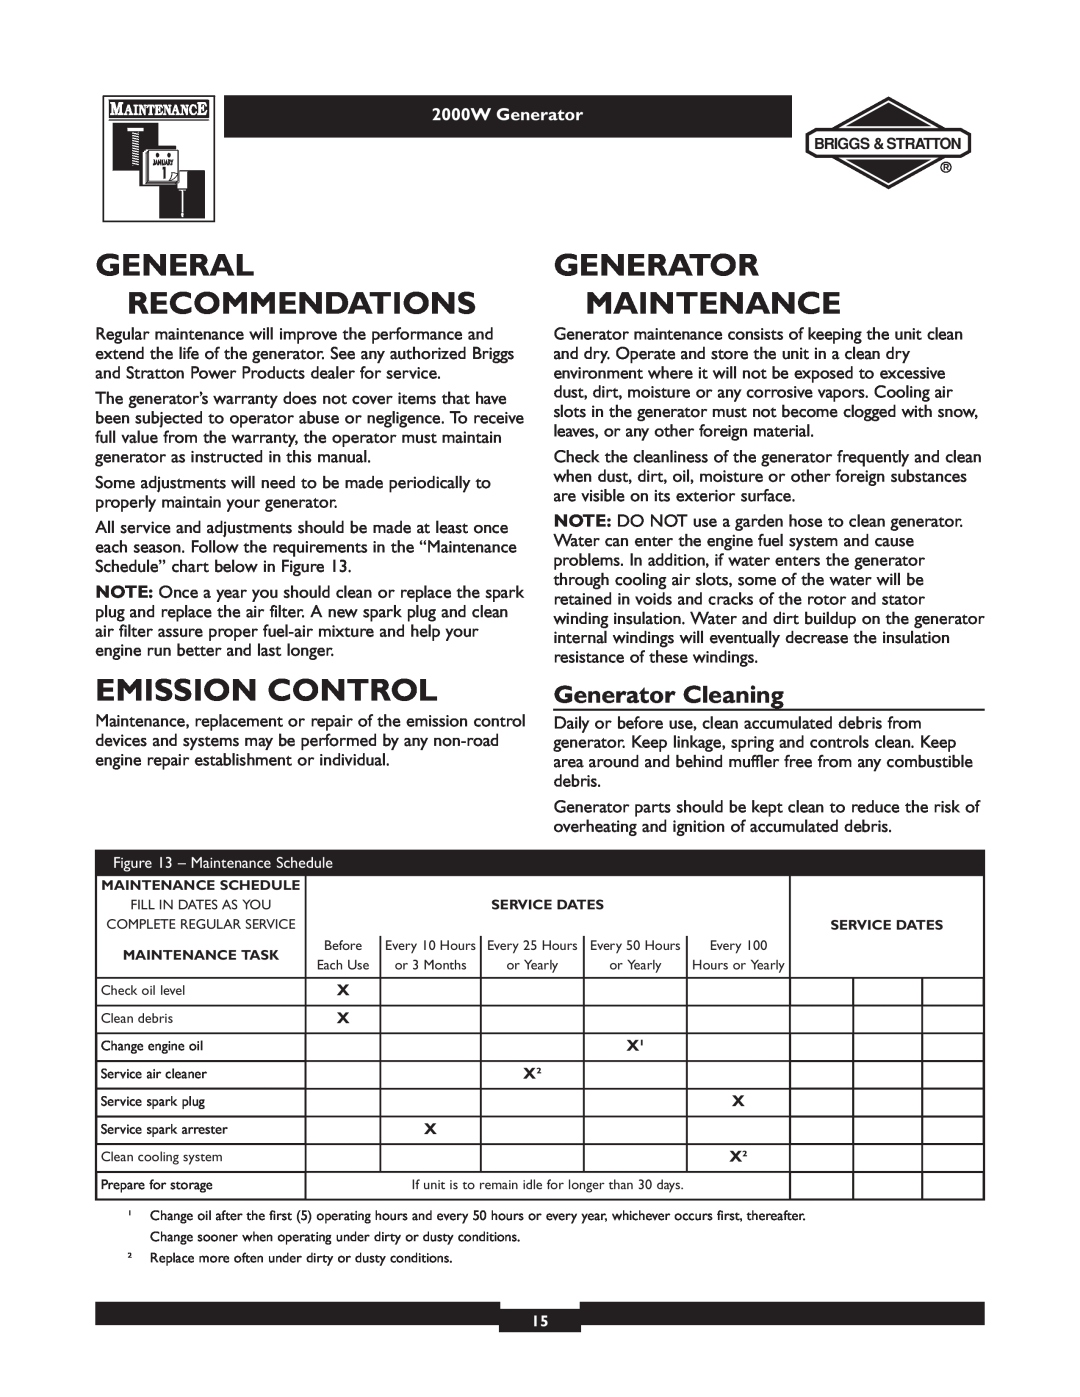 Briggs & Stratton 30239 owner manual Generalgenerator Recommendations Maintenance, Emission Control, Generator Cleaning 